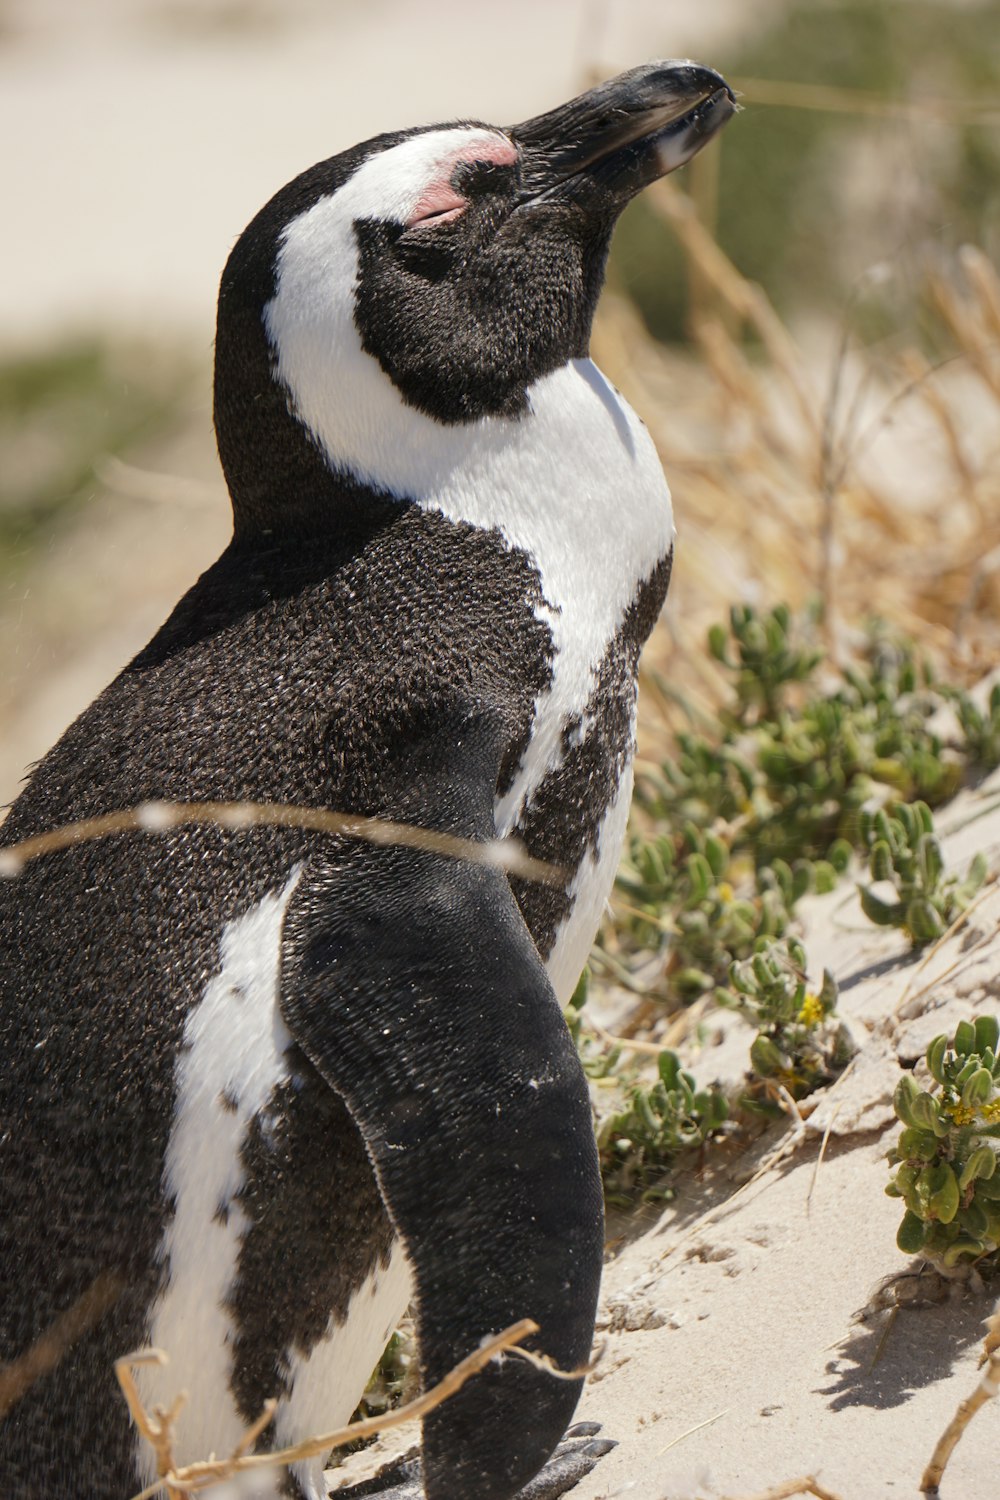 Pingüino blanco y negro mirando de lado